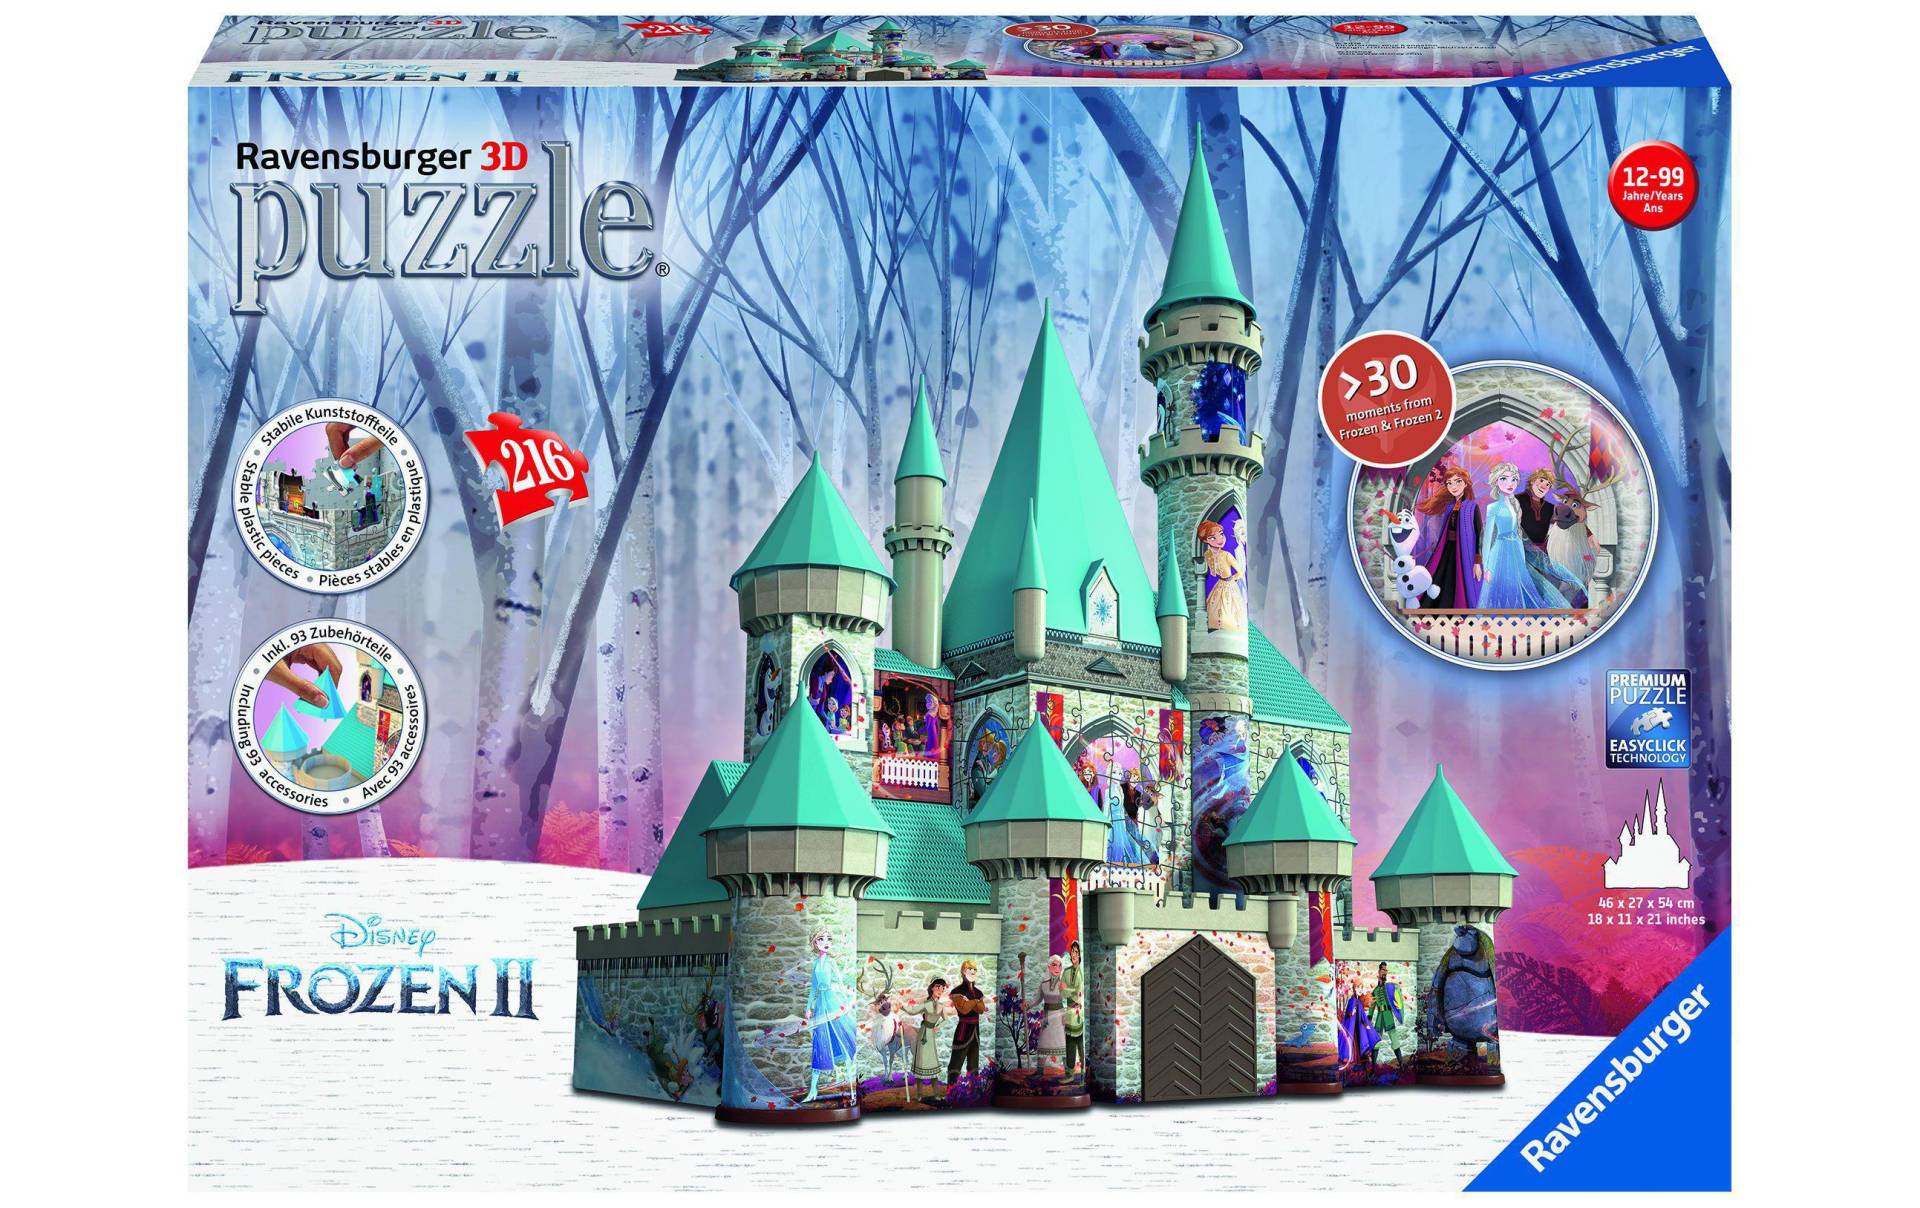 Ravensburger 3D-Puzzle »Frozen II Schloss« von Ravensburger